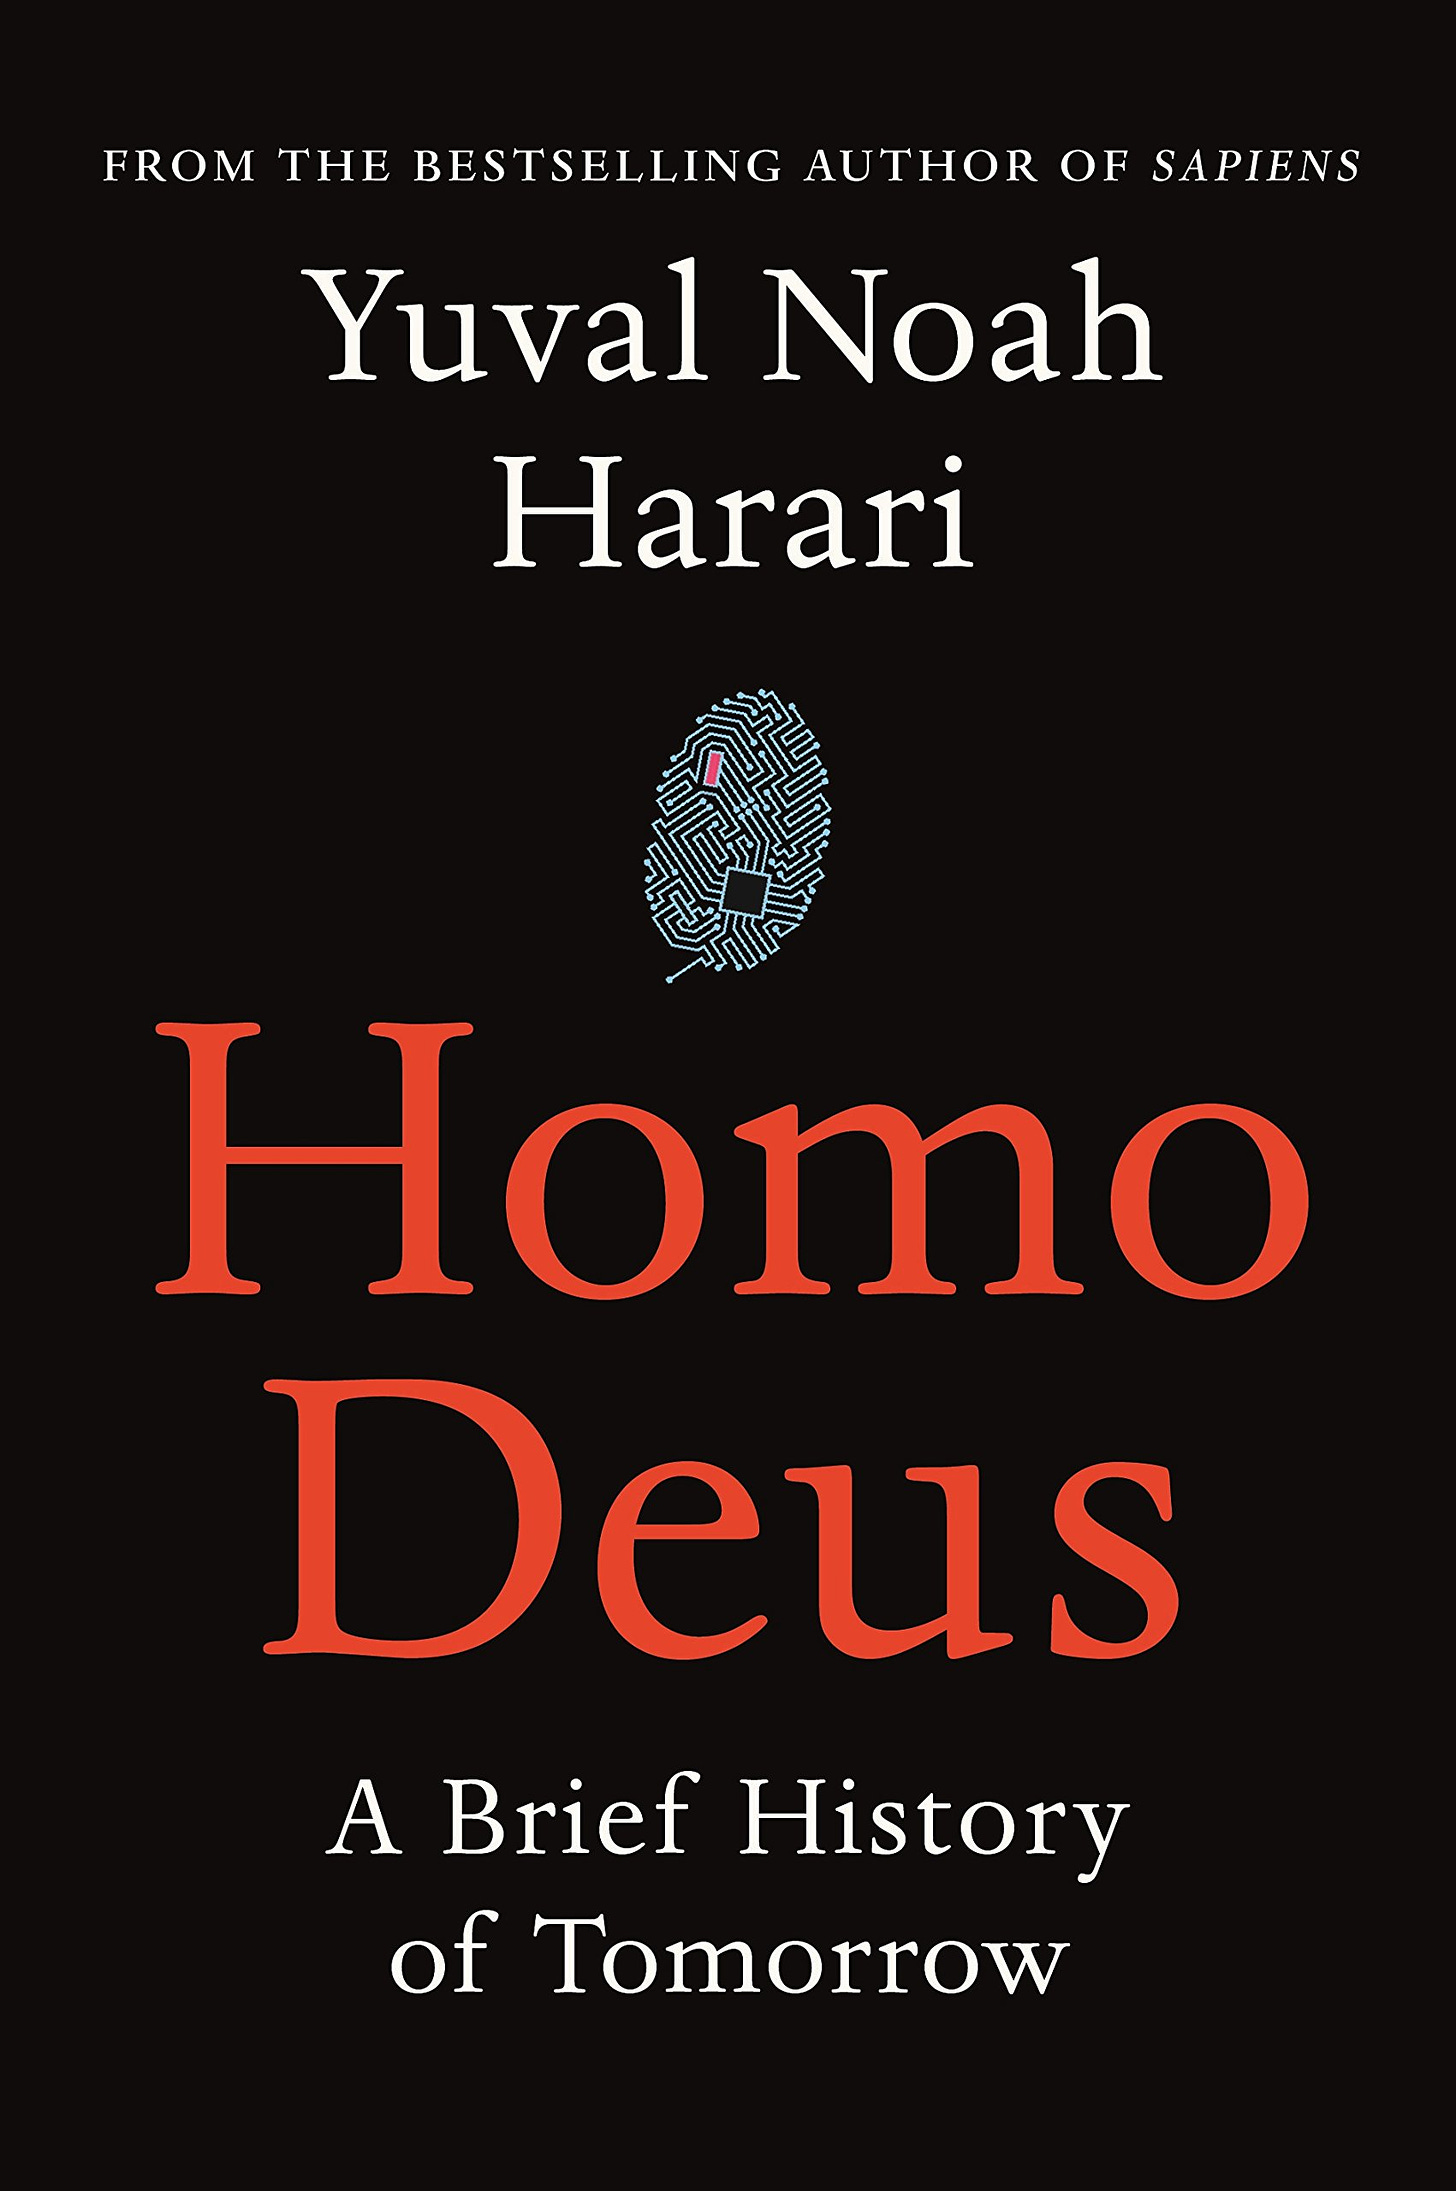 Homo Deus: A Brief History of Tomorrow: Amazon.co.uk: Harari, Yuval Noah:  9781910701874: Books